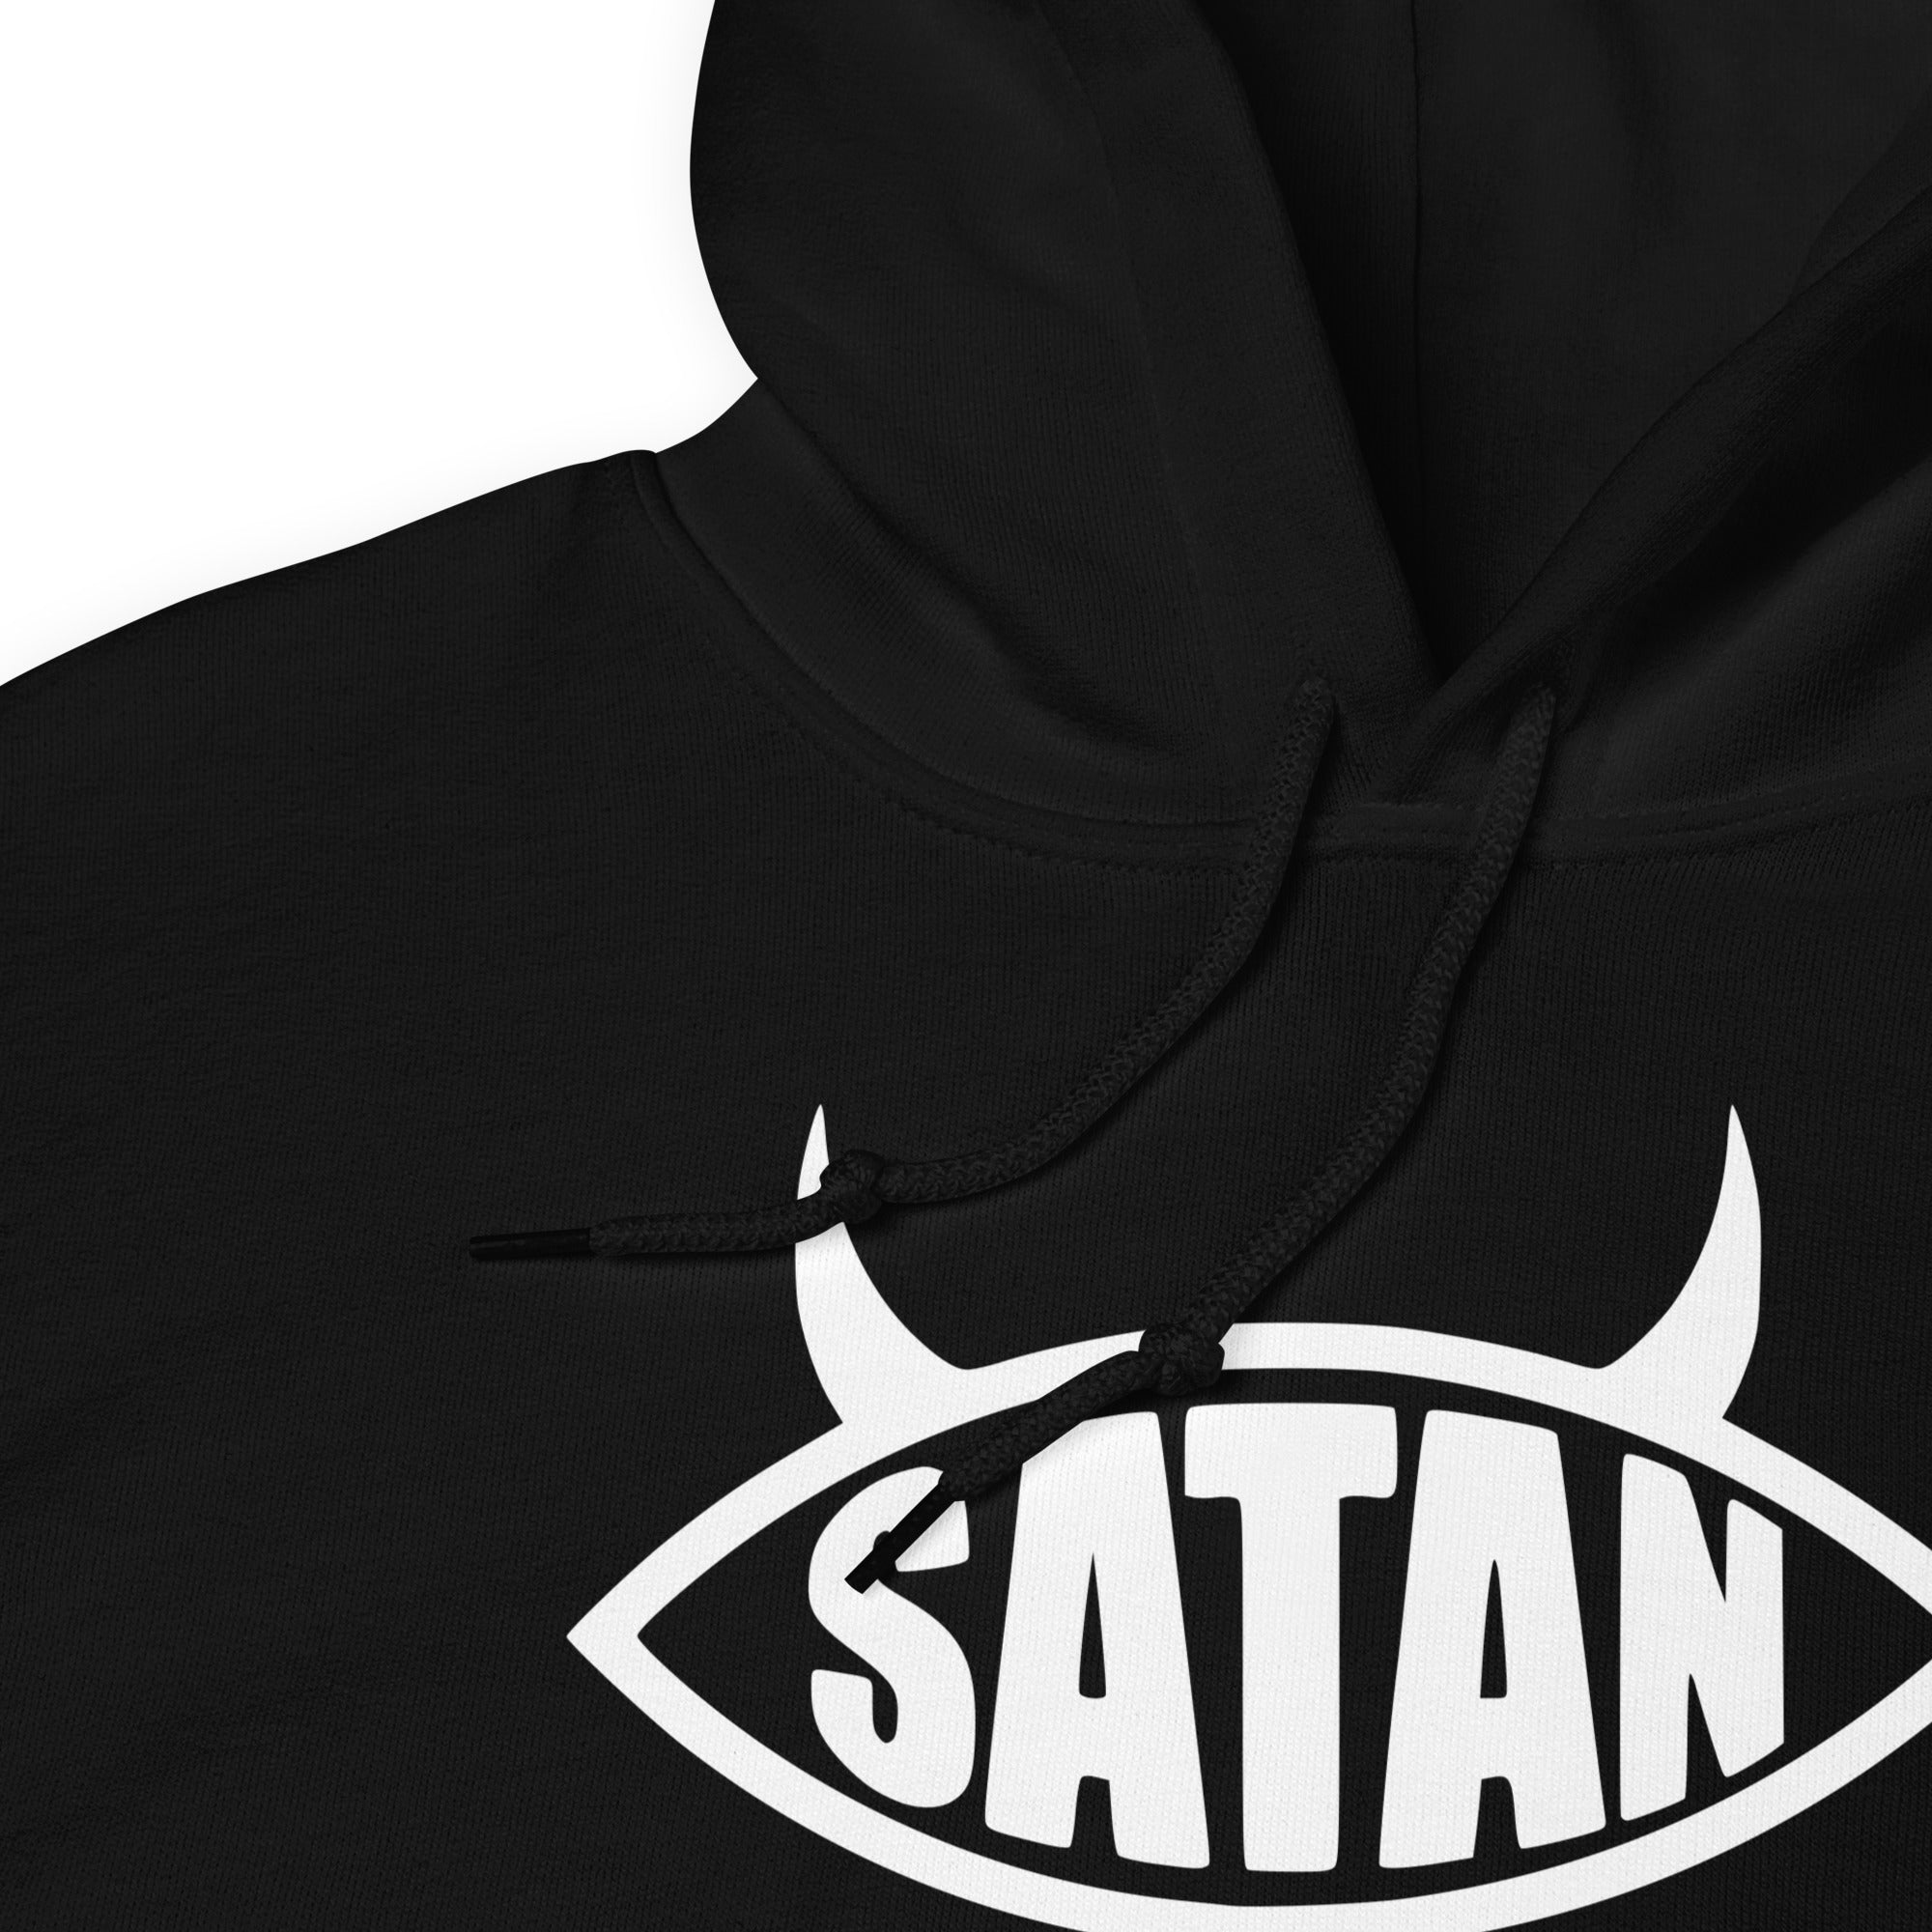 White Ichthys Satan Fish with Horns Religious Satire Hoodie Sweatshirt